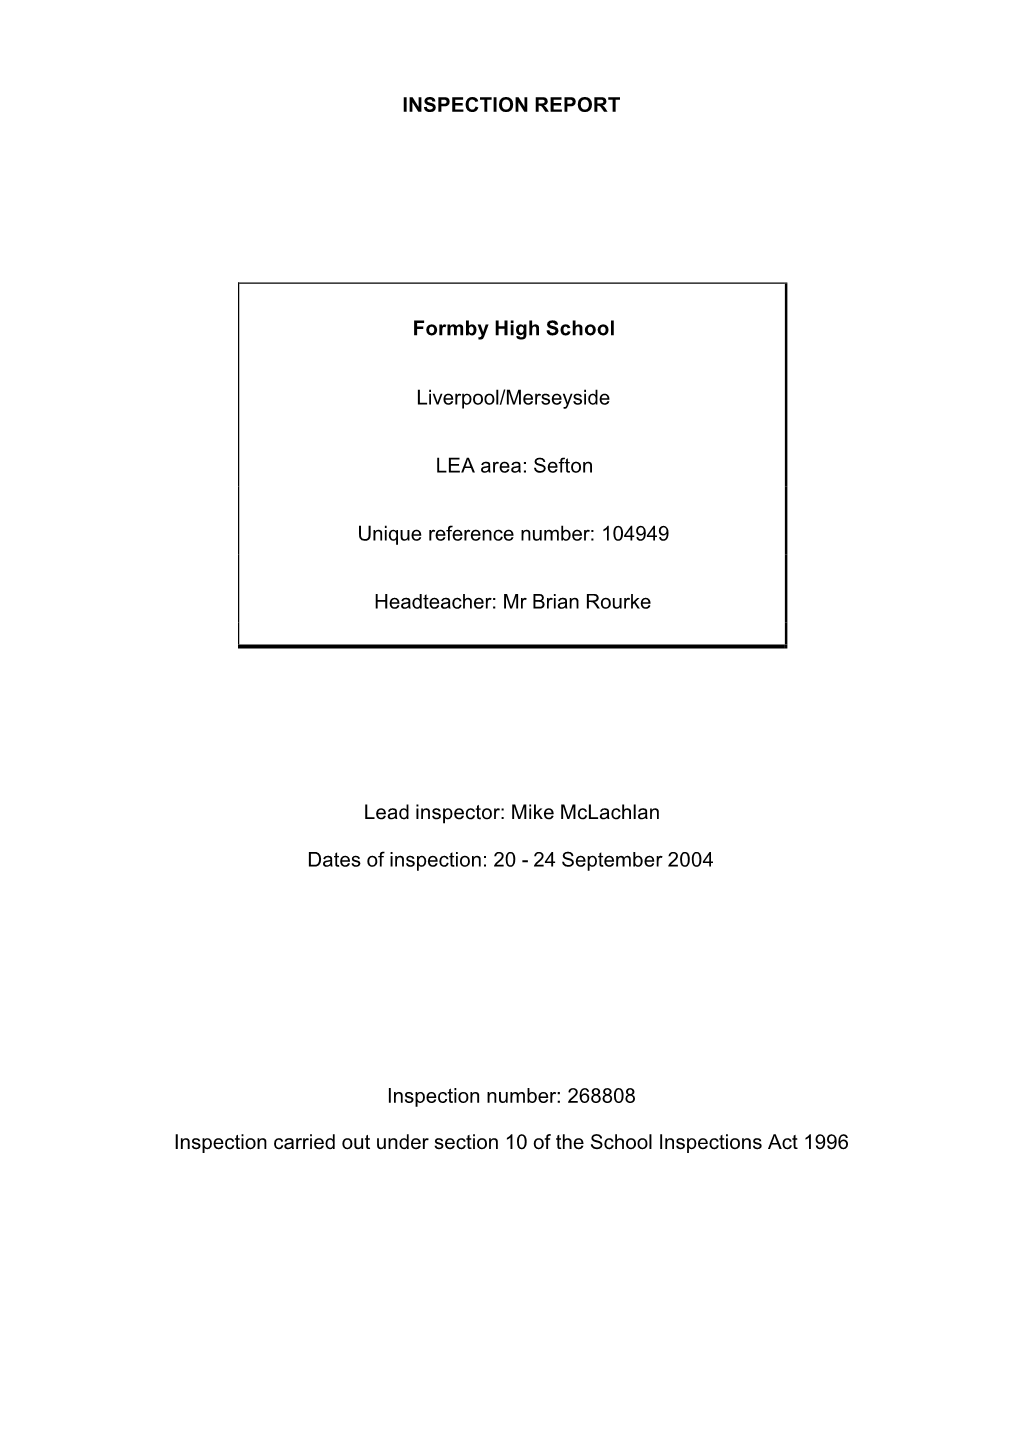 INSPECTION REPORT Formby High School Liverpool/Merseyside LEA